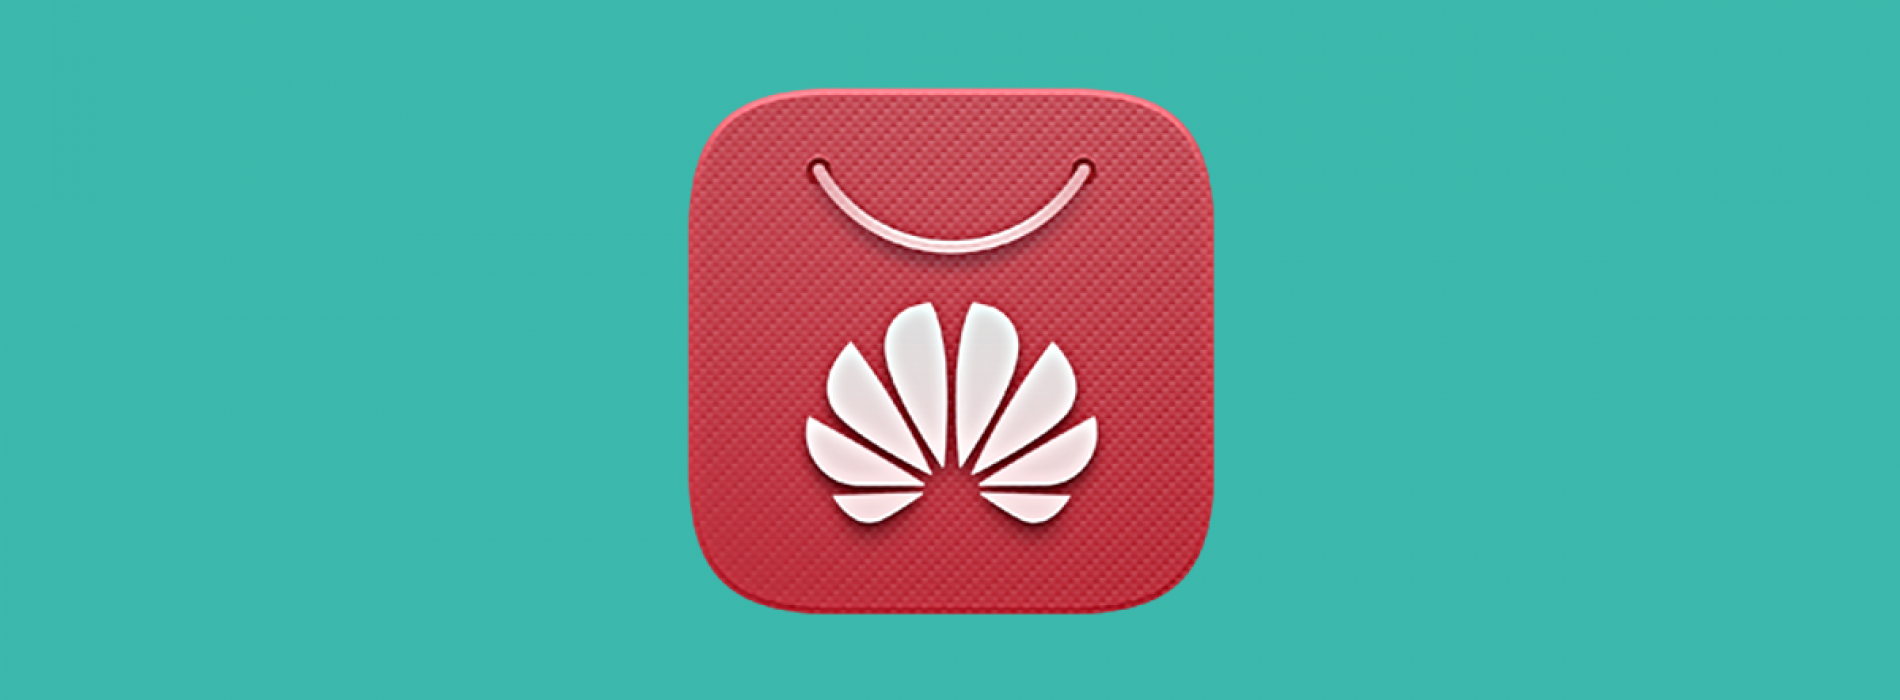 Https appgallery huawei ru. APPGALLERY от Huawei. Huawei app Gallery значок. Хонор магазин приложений. Магазин приложений для Хуавей логотип.